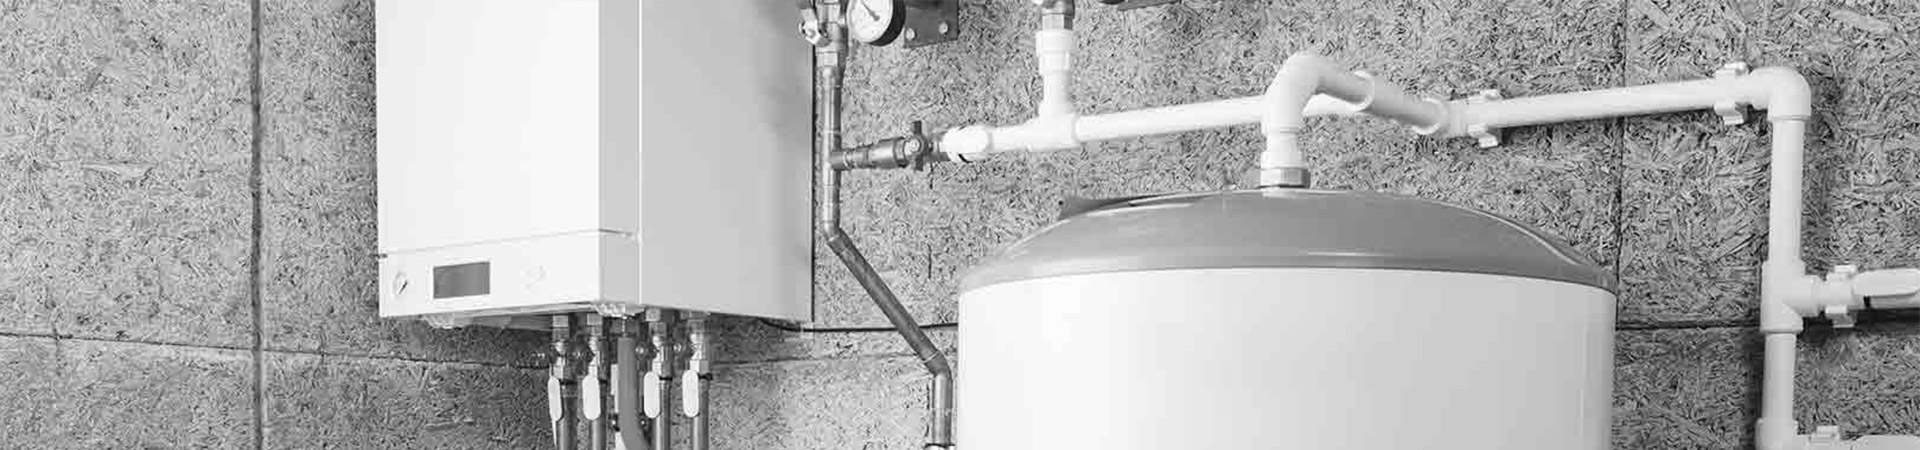 hero-water-heater-plumbing-pipes-hutchinson-ks